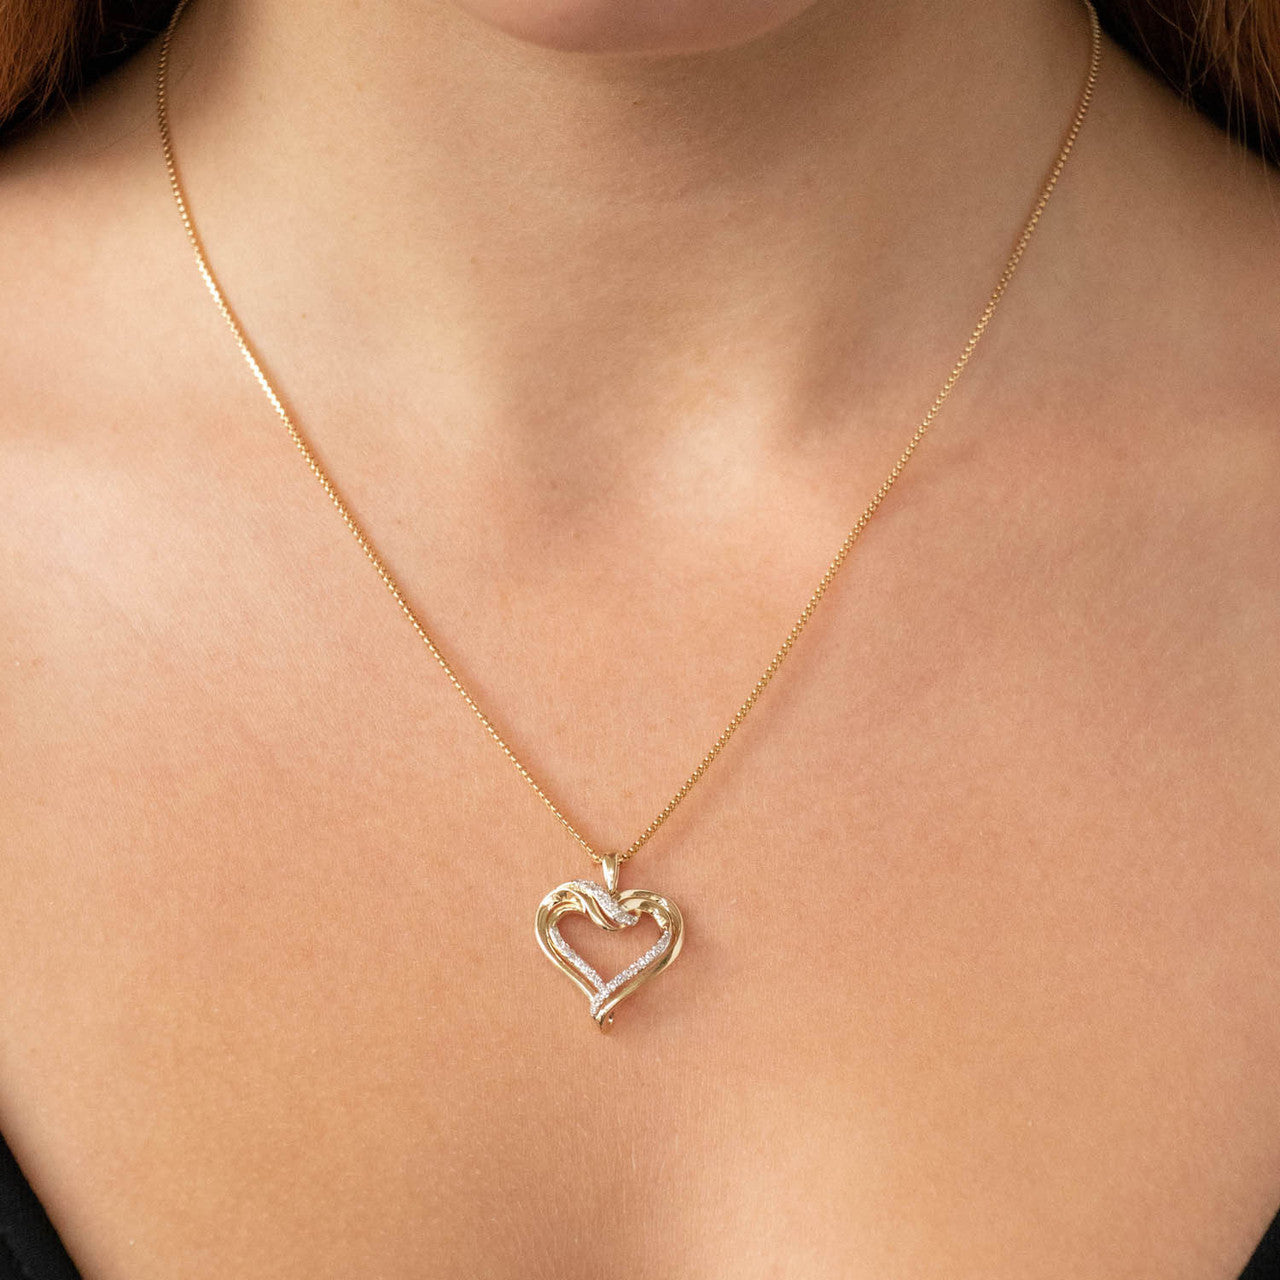 Ice Jewellery Heart Pendant with 0.15ct Diamond in 9K Yellow Gold | Ice Jewellery Australia